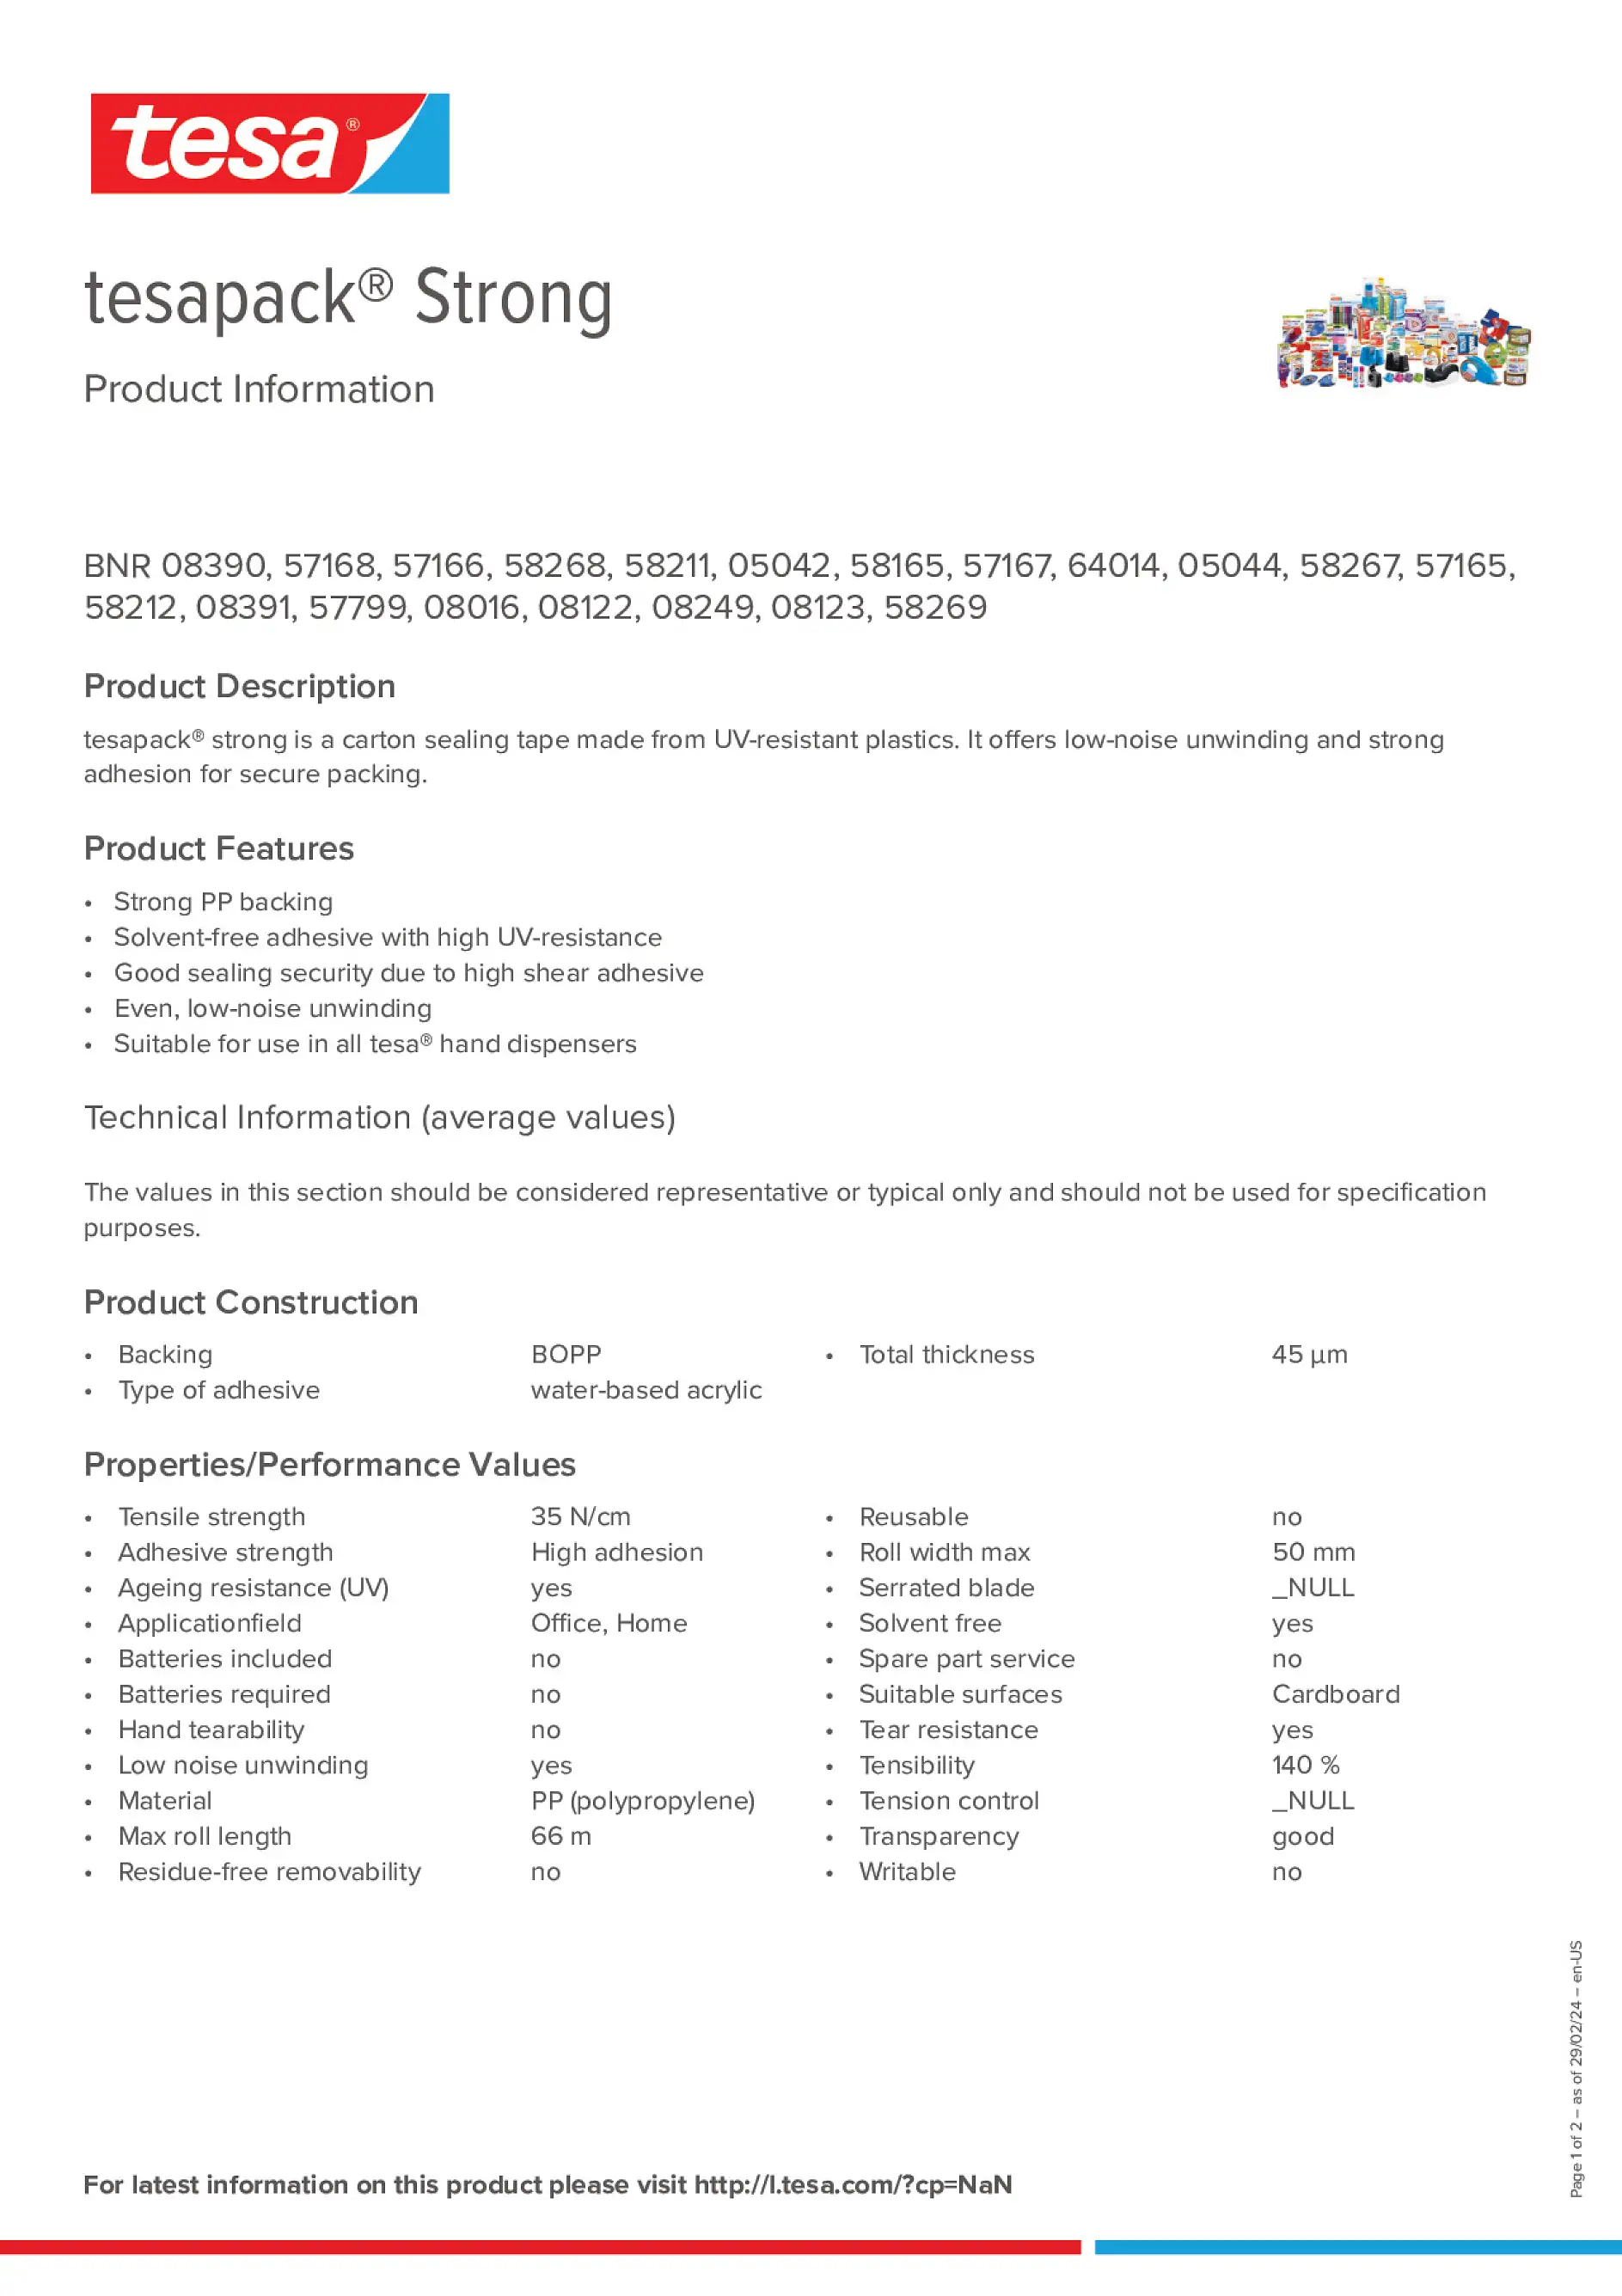 Product information_tesapack® 57424_en